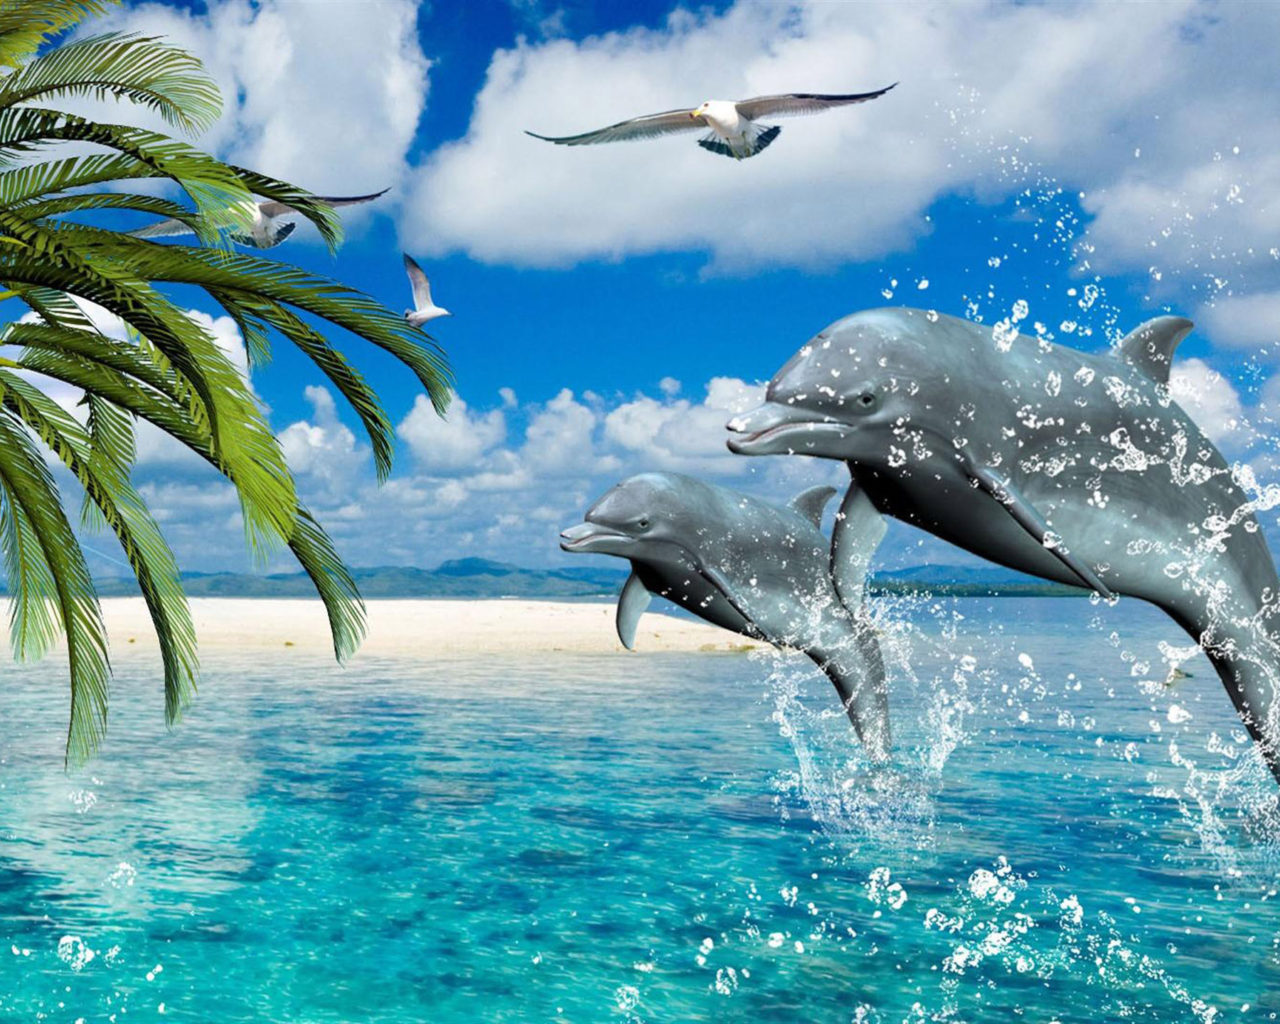 Dolphins Summer Sea Gulls Palm Desktop Wallpaper HD For Mobile Phones And Laptops 2560x1440, Wallpaper13.com